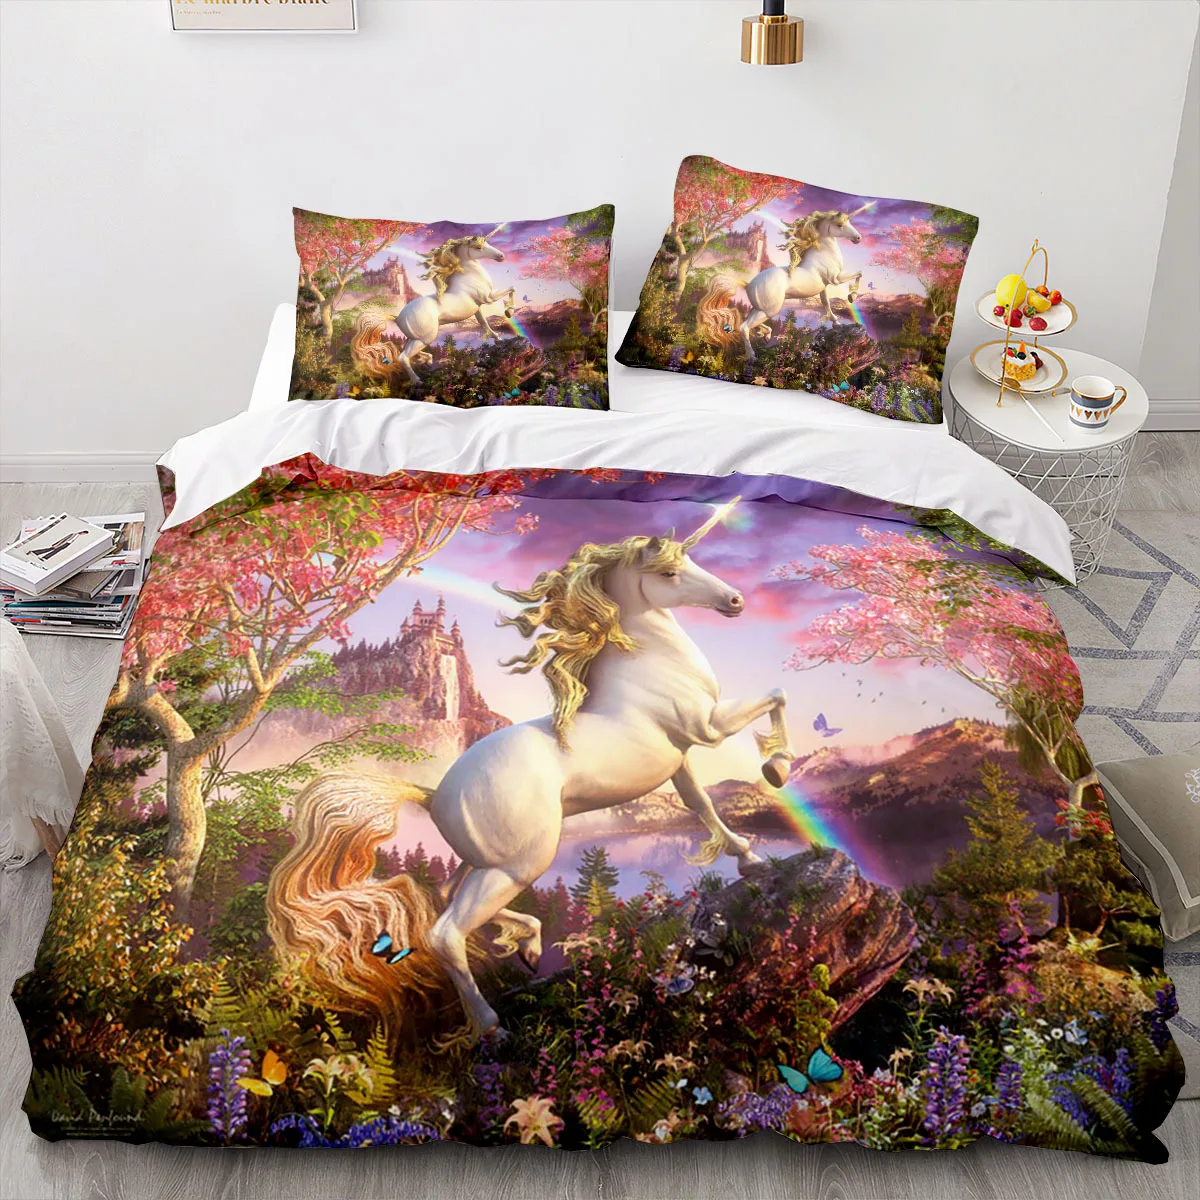 

Cartoon Rainbow Colorful Unicorn Cute Bedding Set Romantic Theme for Kids Girls Polyester Comforter Cover Unicorn Duvet Cover